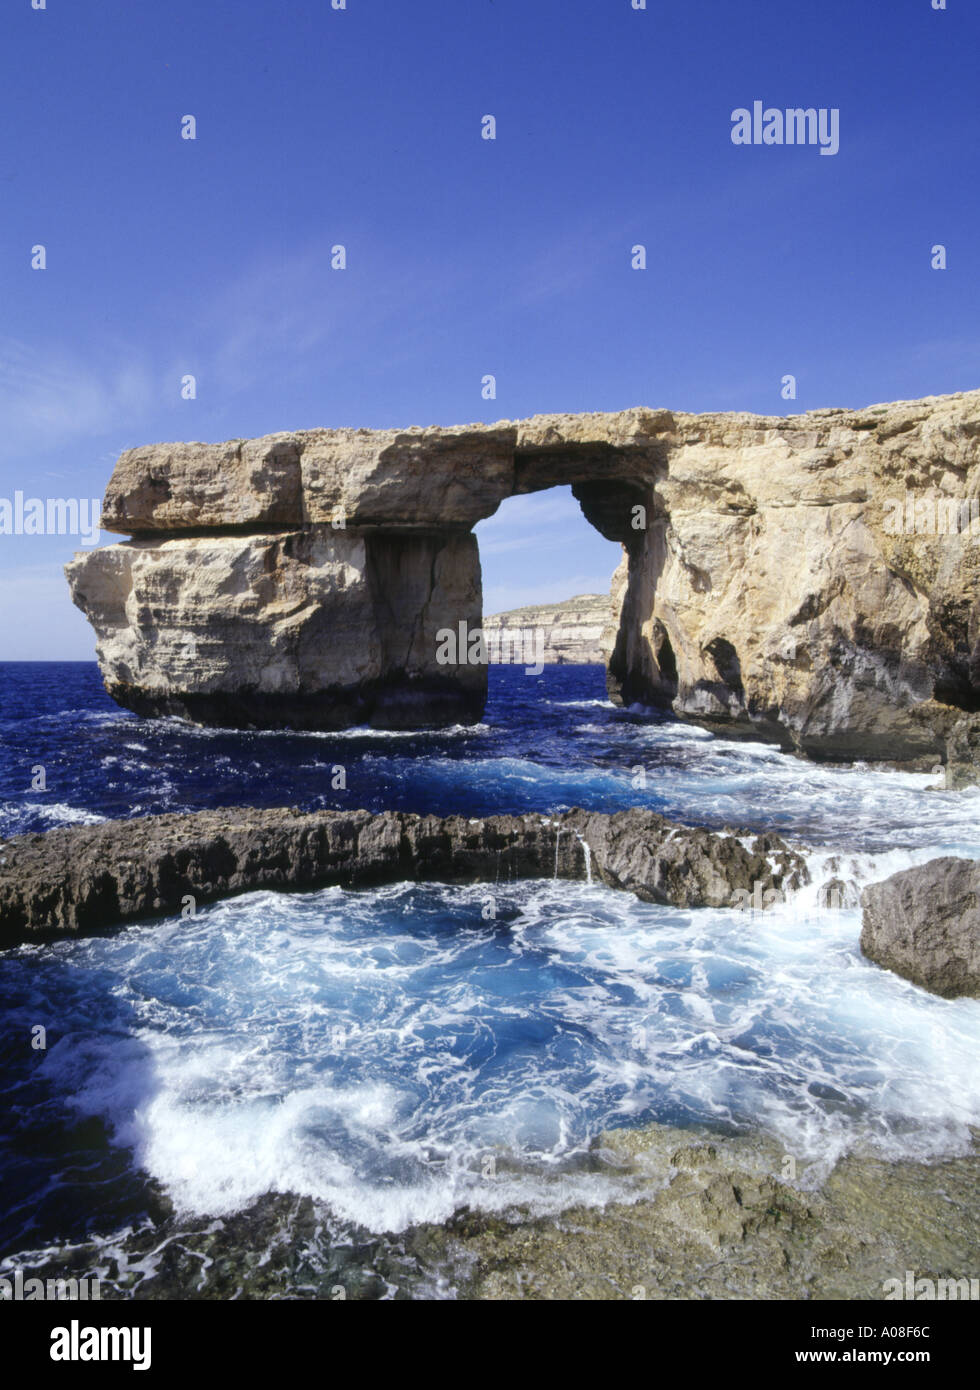 dh Azure Window DWEJRA POINT GOZO Natural rock arch island of seacliffs malta blue sky formations Stock Photo